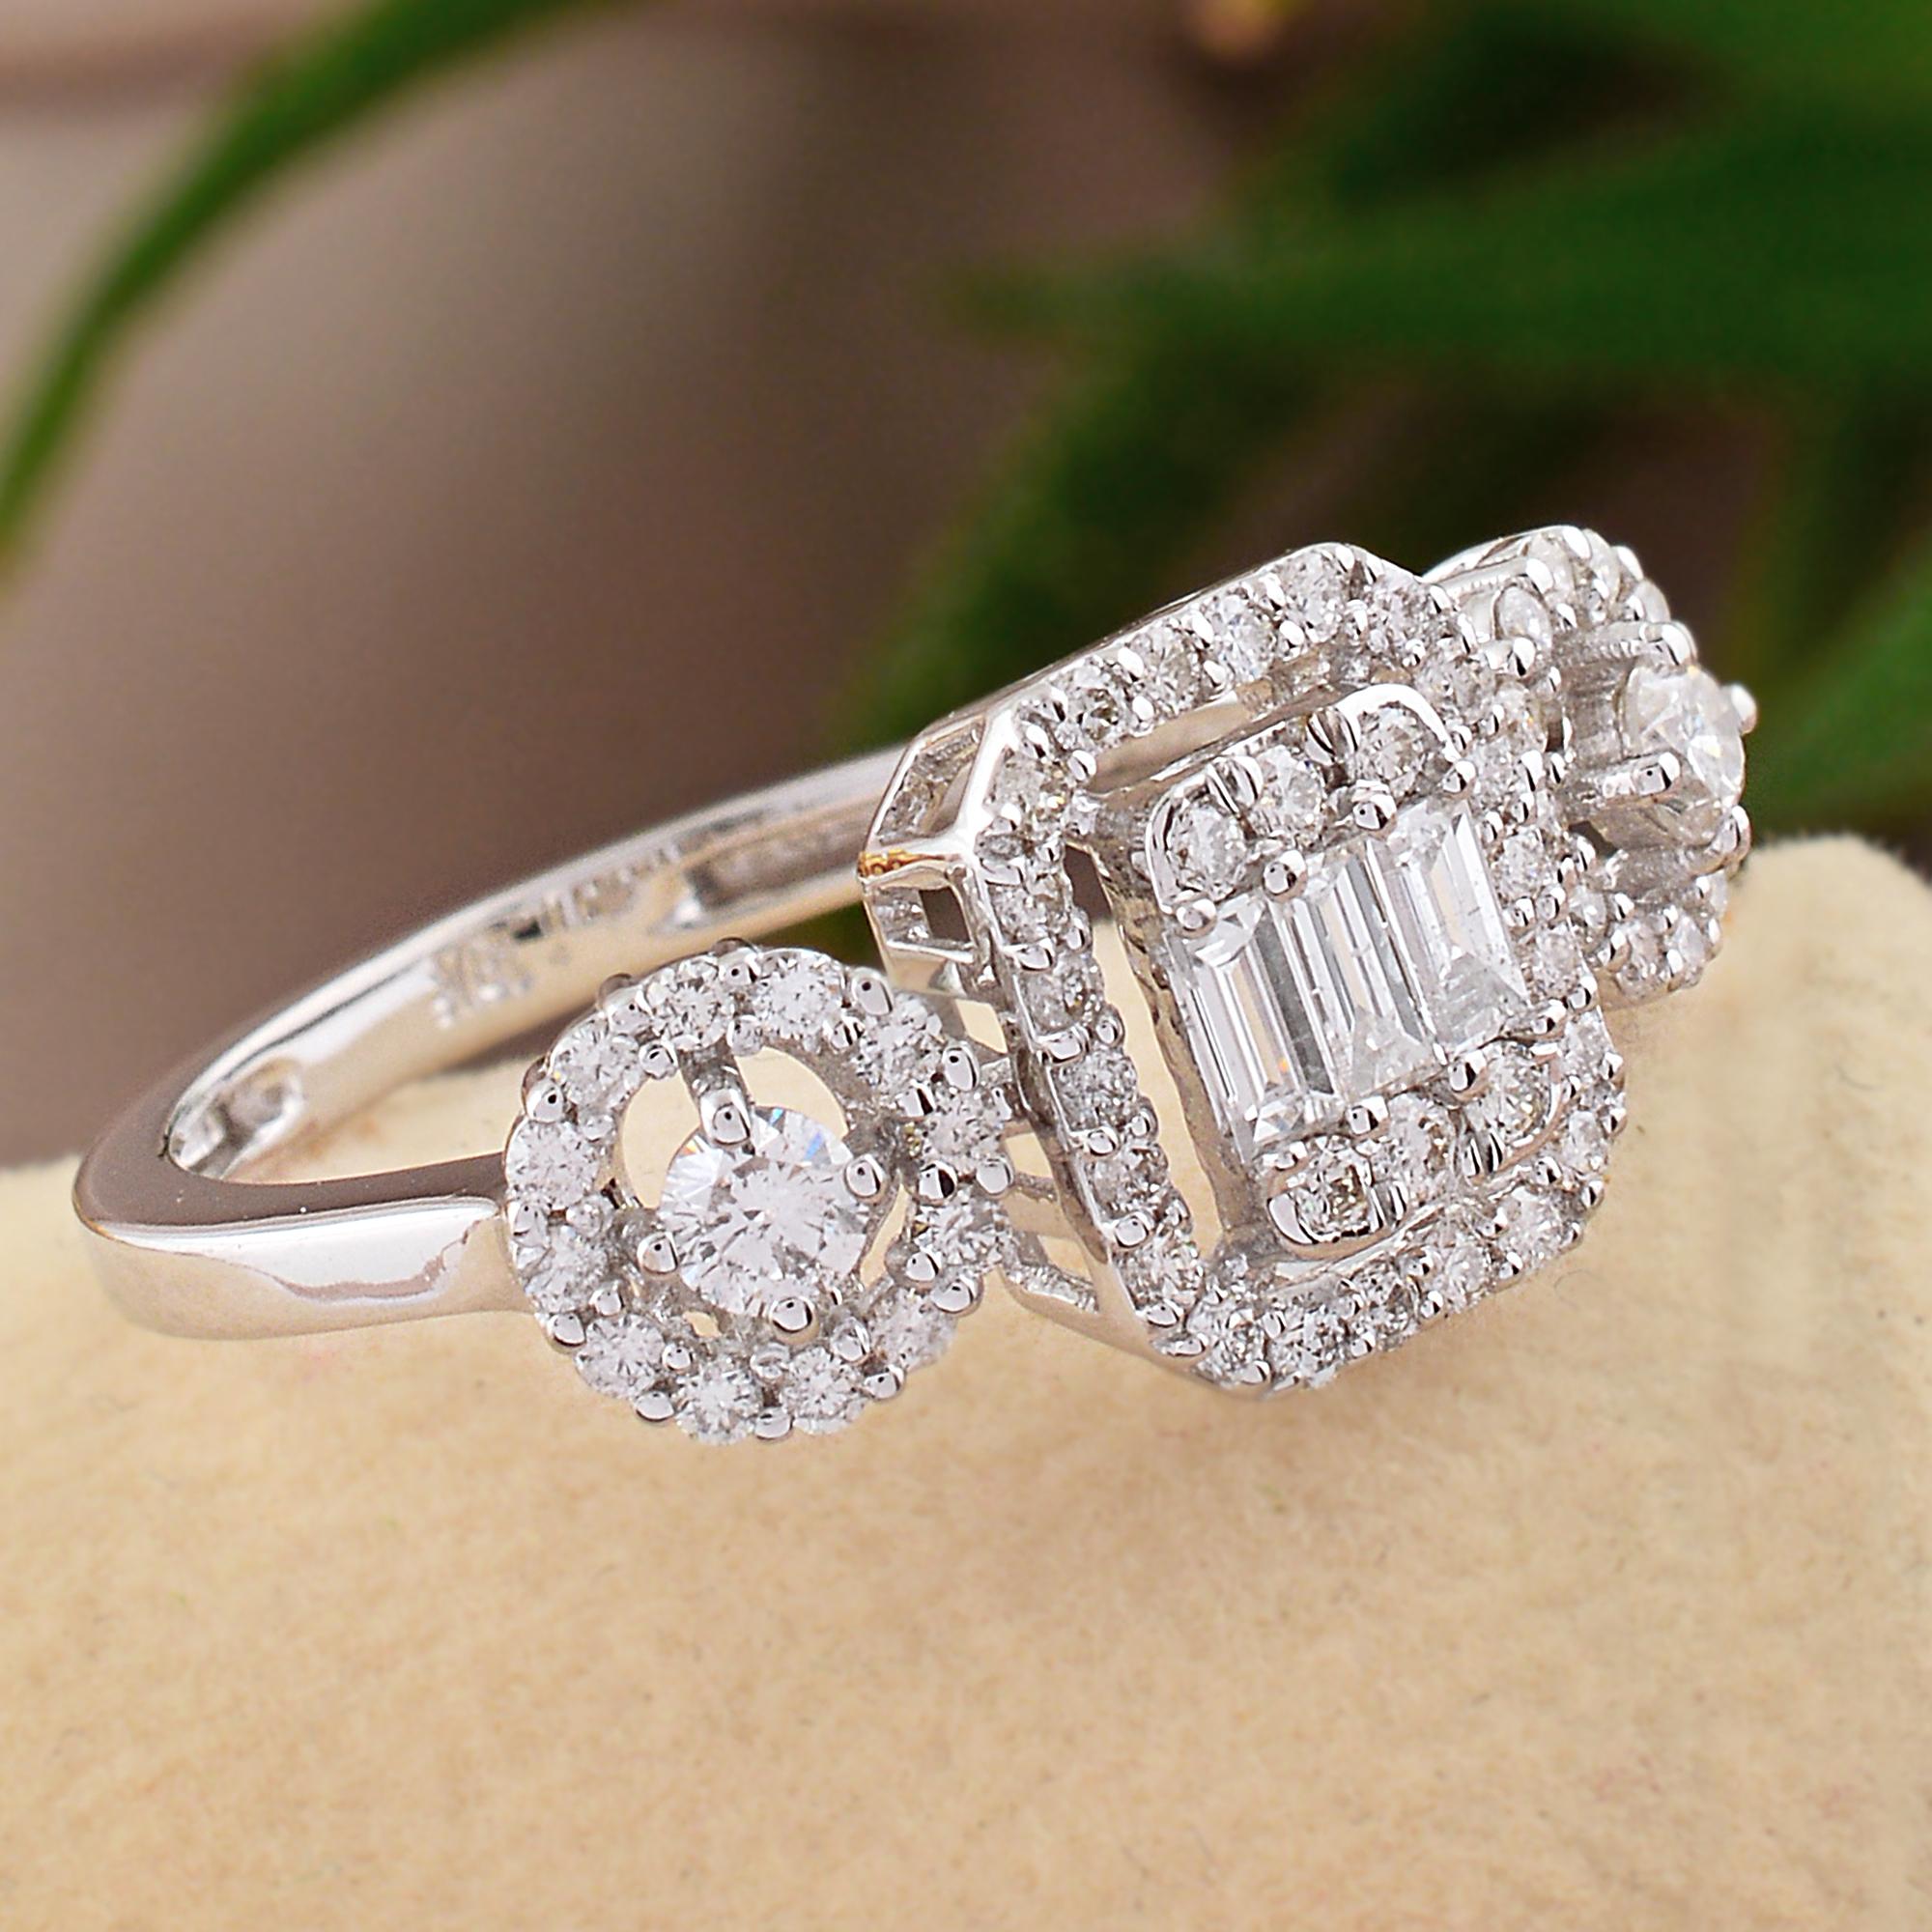 For Sale:  0.76 Carat SI Clarity HI Color Baguette Diamond Ring 18 Karat White Gold Jewelry 5